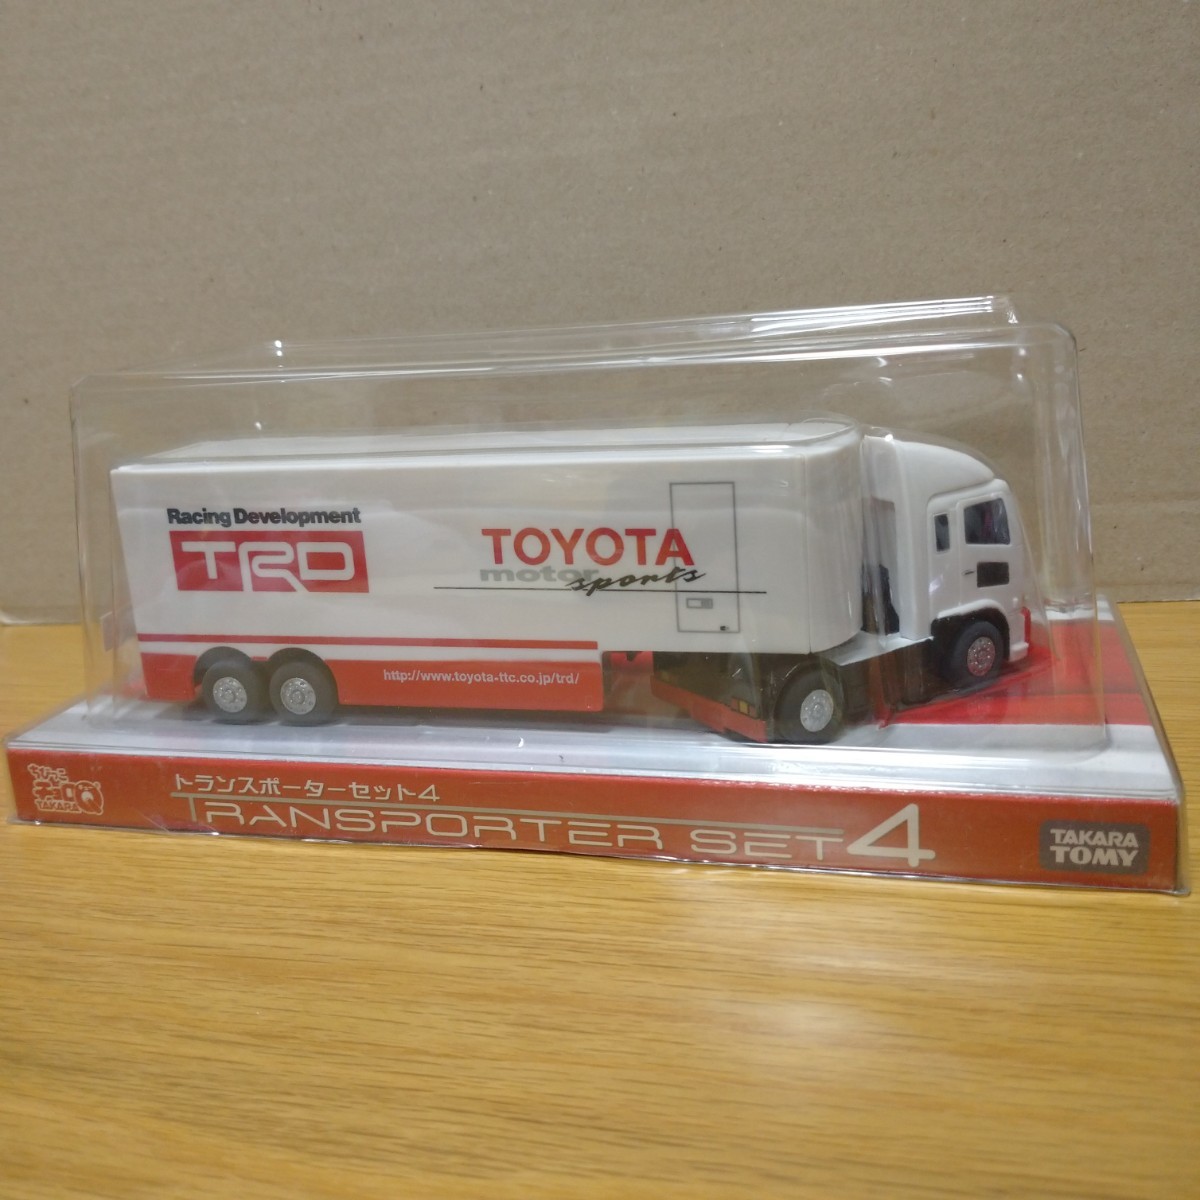 TOYOTA Toyota TRO AE86 86 Transporter комплект Transporter Choro Q коллекция прицеп миникар TAKARA TOMY collection